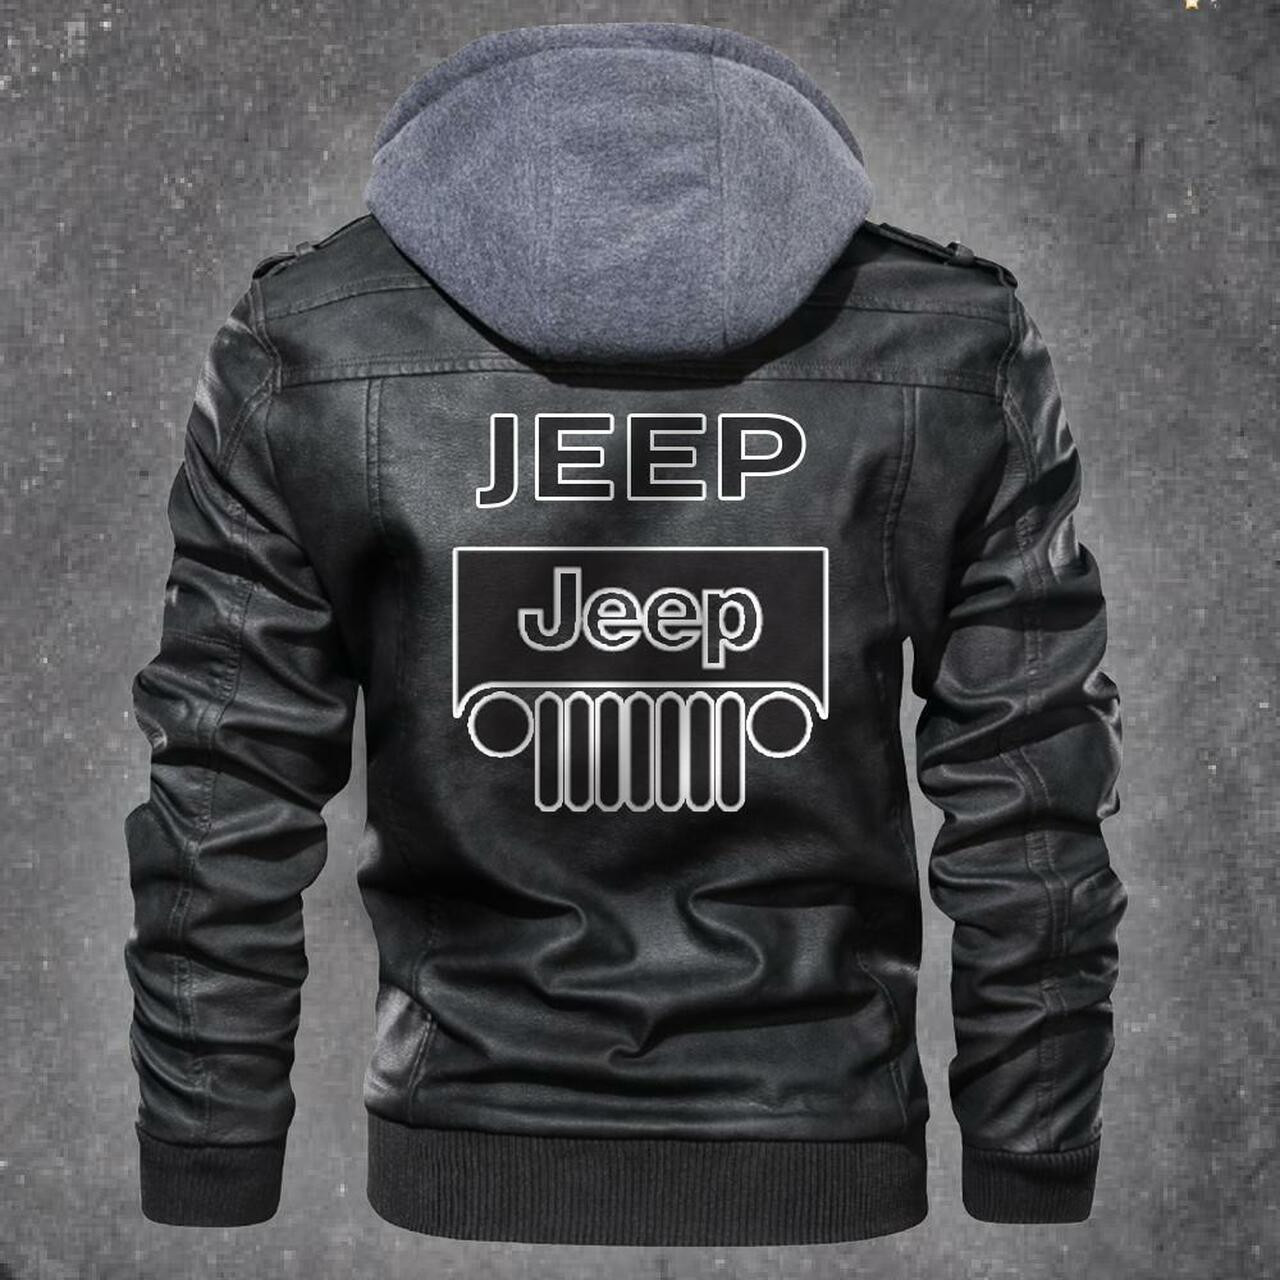 Top leather jacket Sells Best on Techcomshop 176